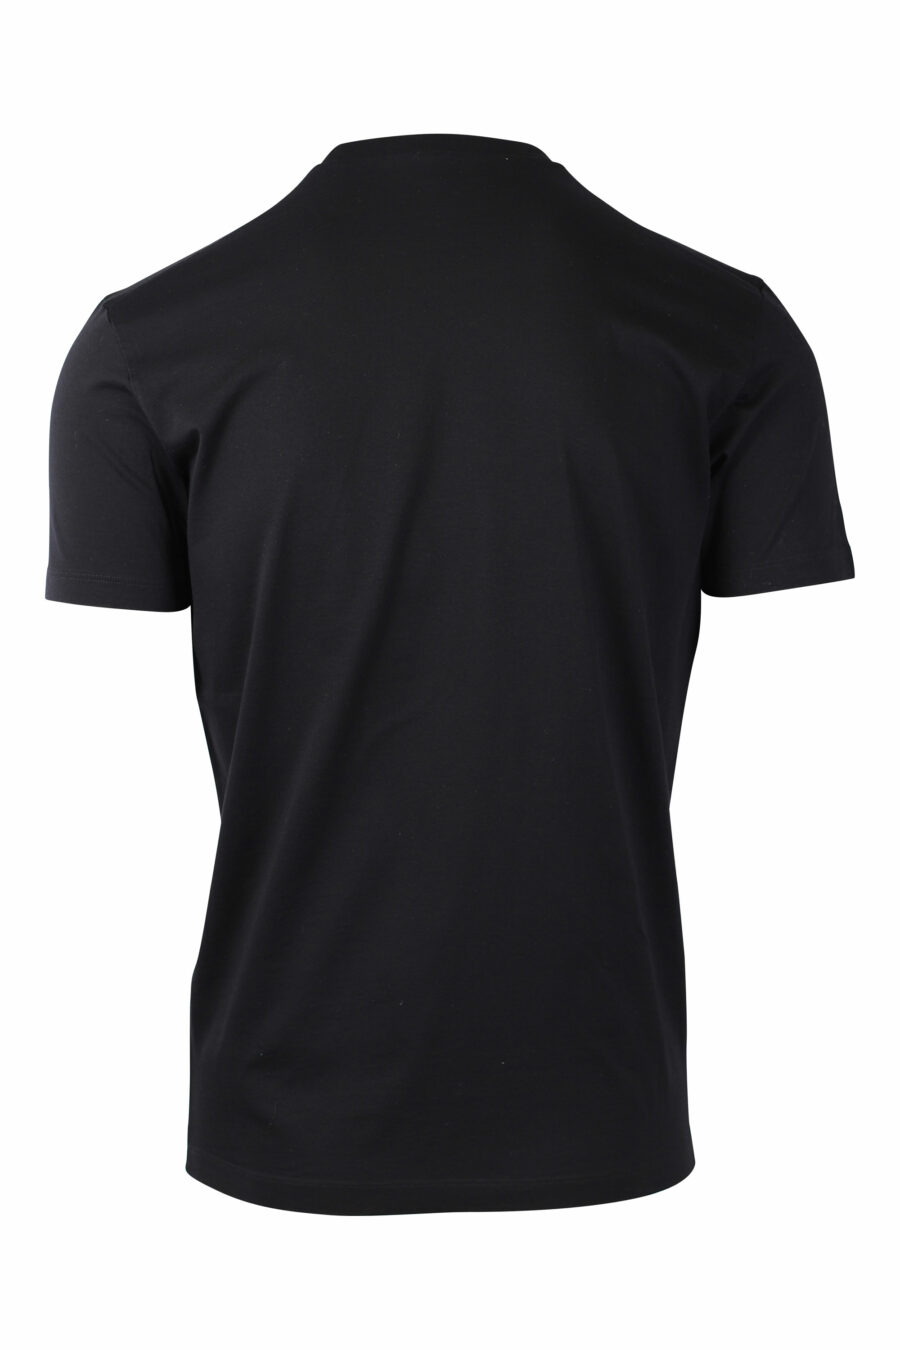 Camiseta negra con maxilogo hoja surfeando - IMG 1463